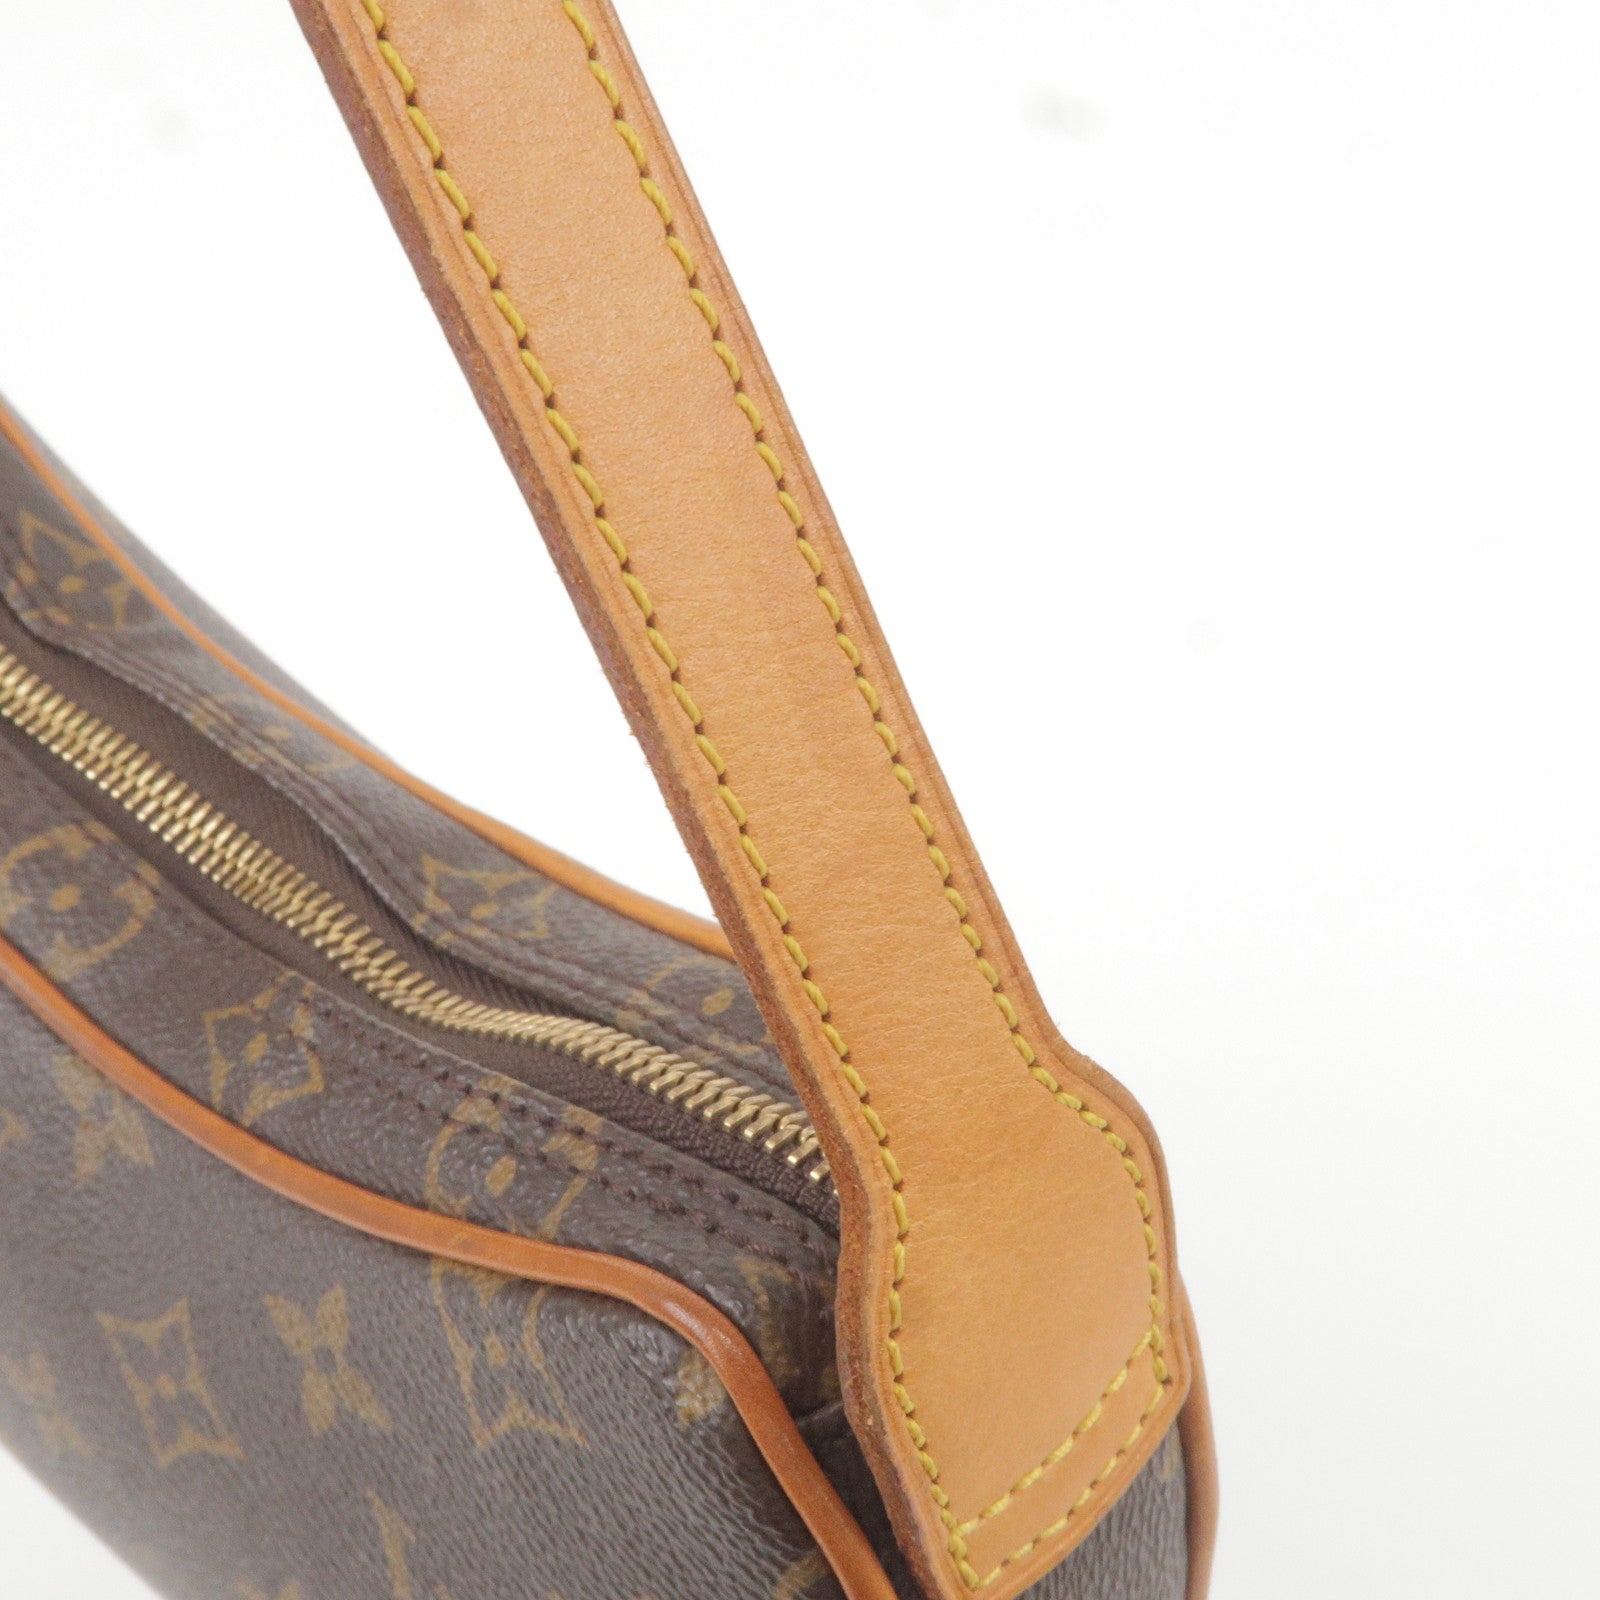 Louis Vuitton Brown Vernis Pochette Mott Beige Leather Patent